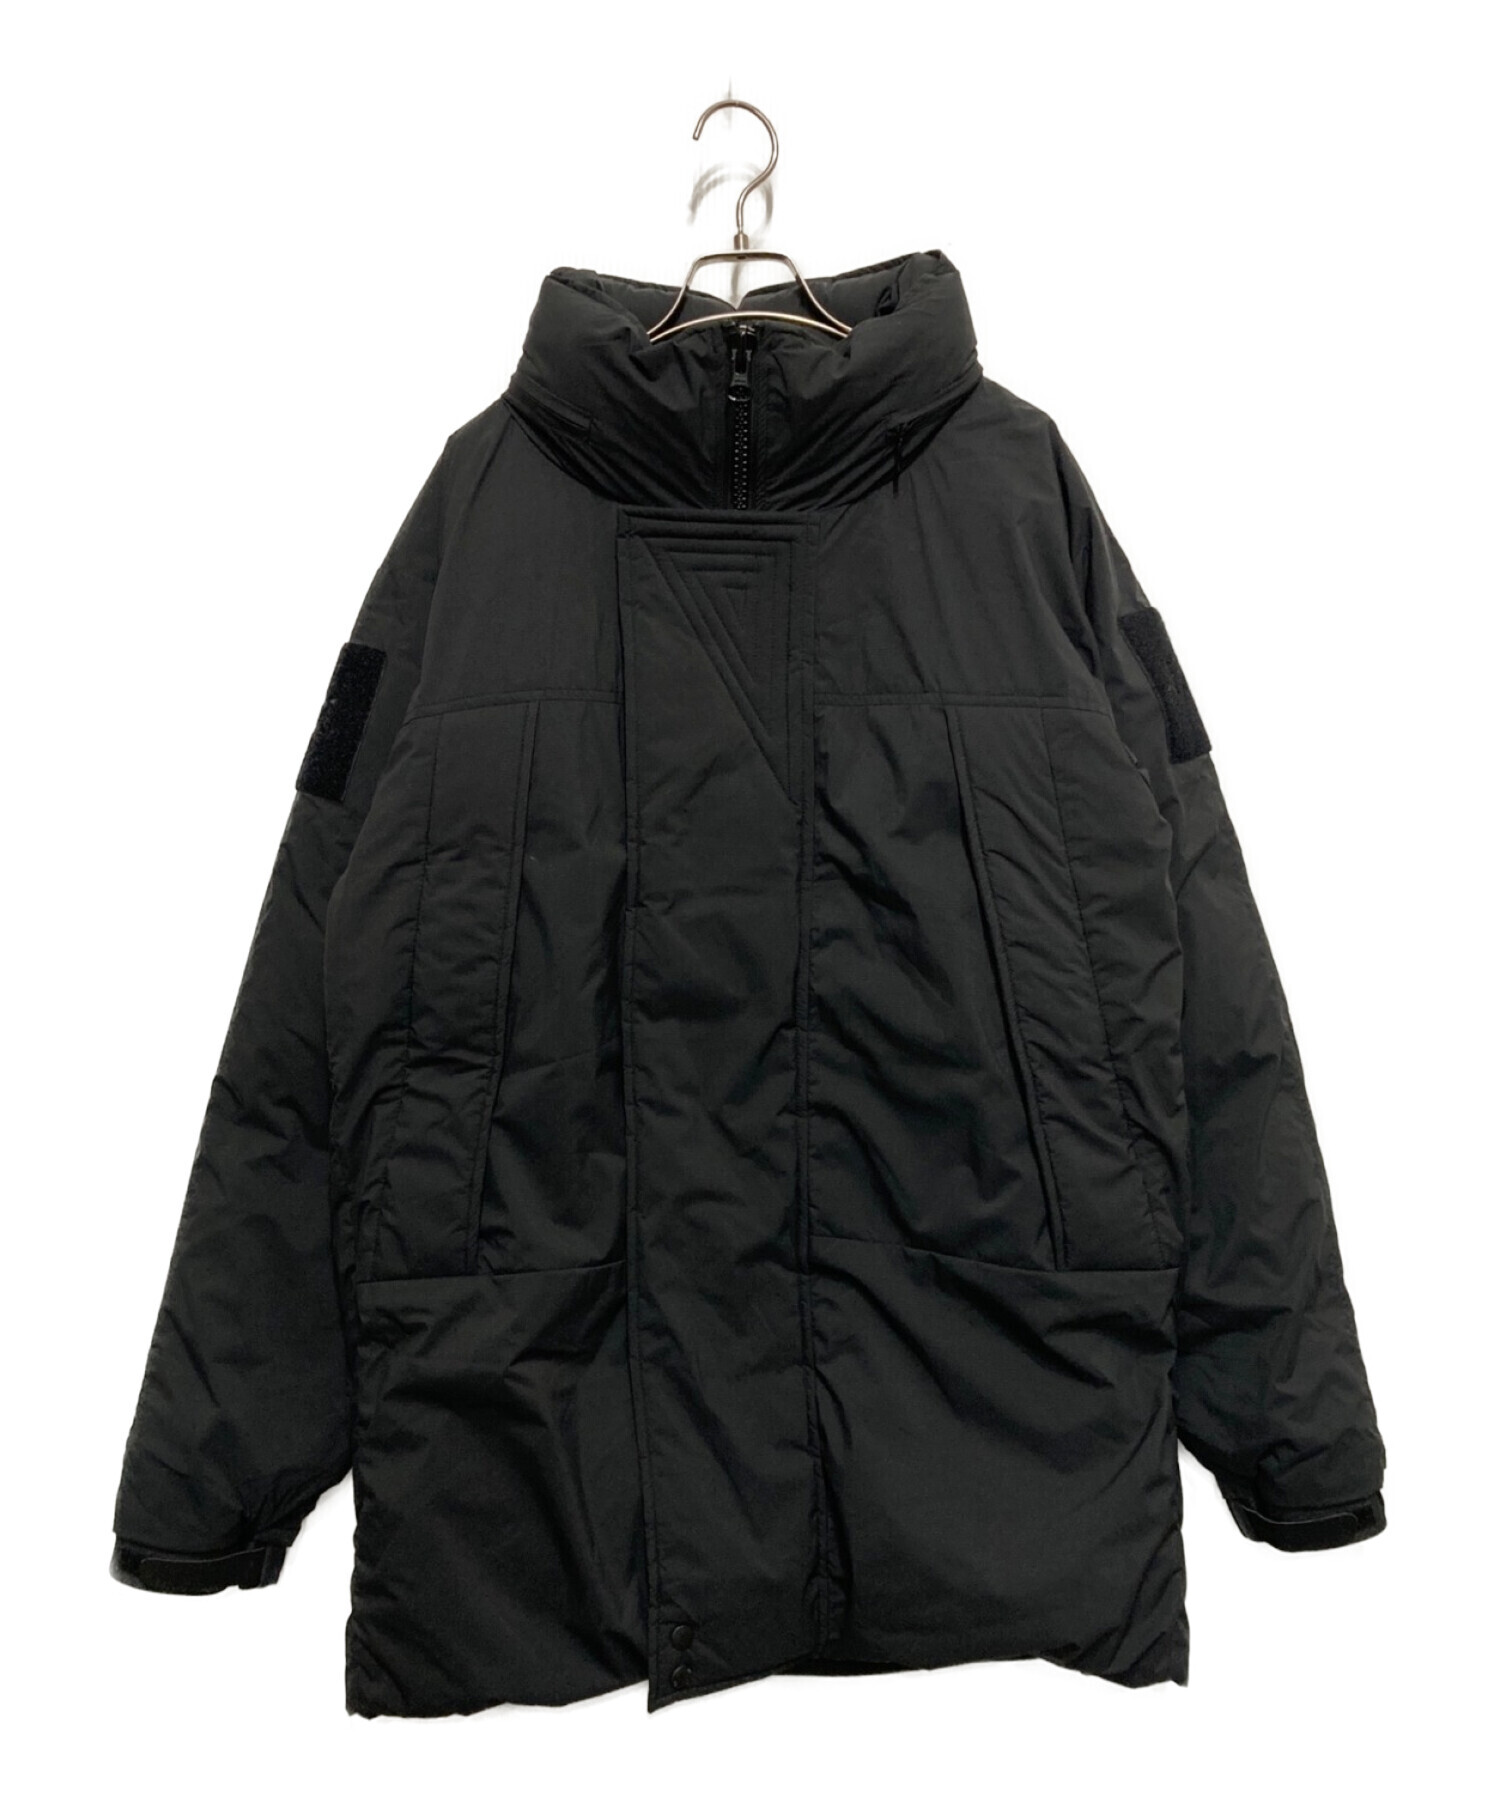 F/CE. (エフシーイー) NANGA (ナンガ) モンスターパーカーダウンジャケット ブラック サイズ:Ⅿ